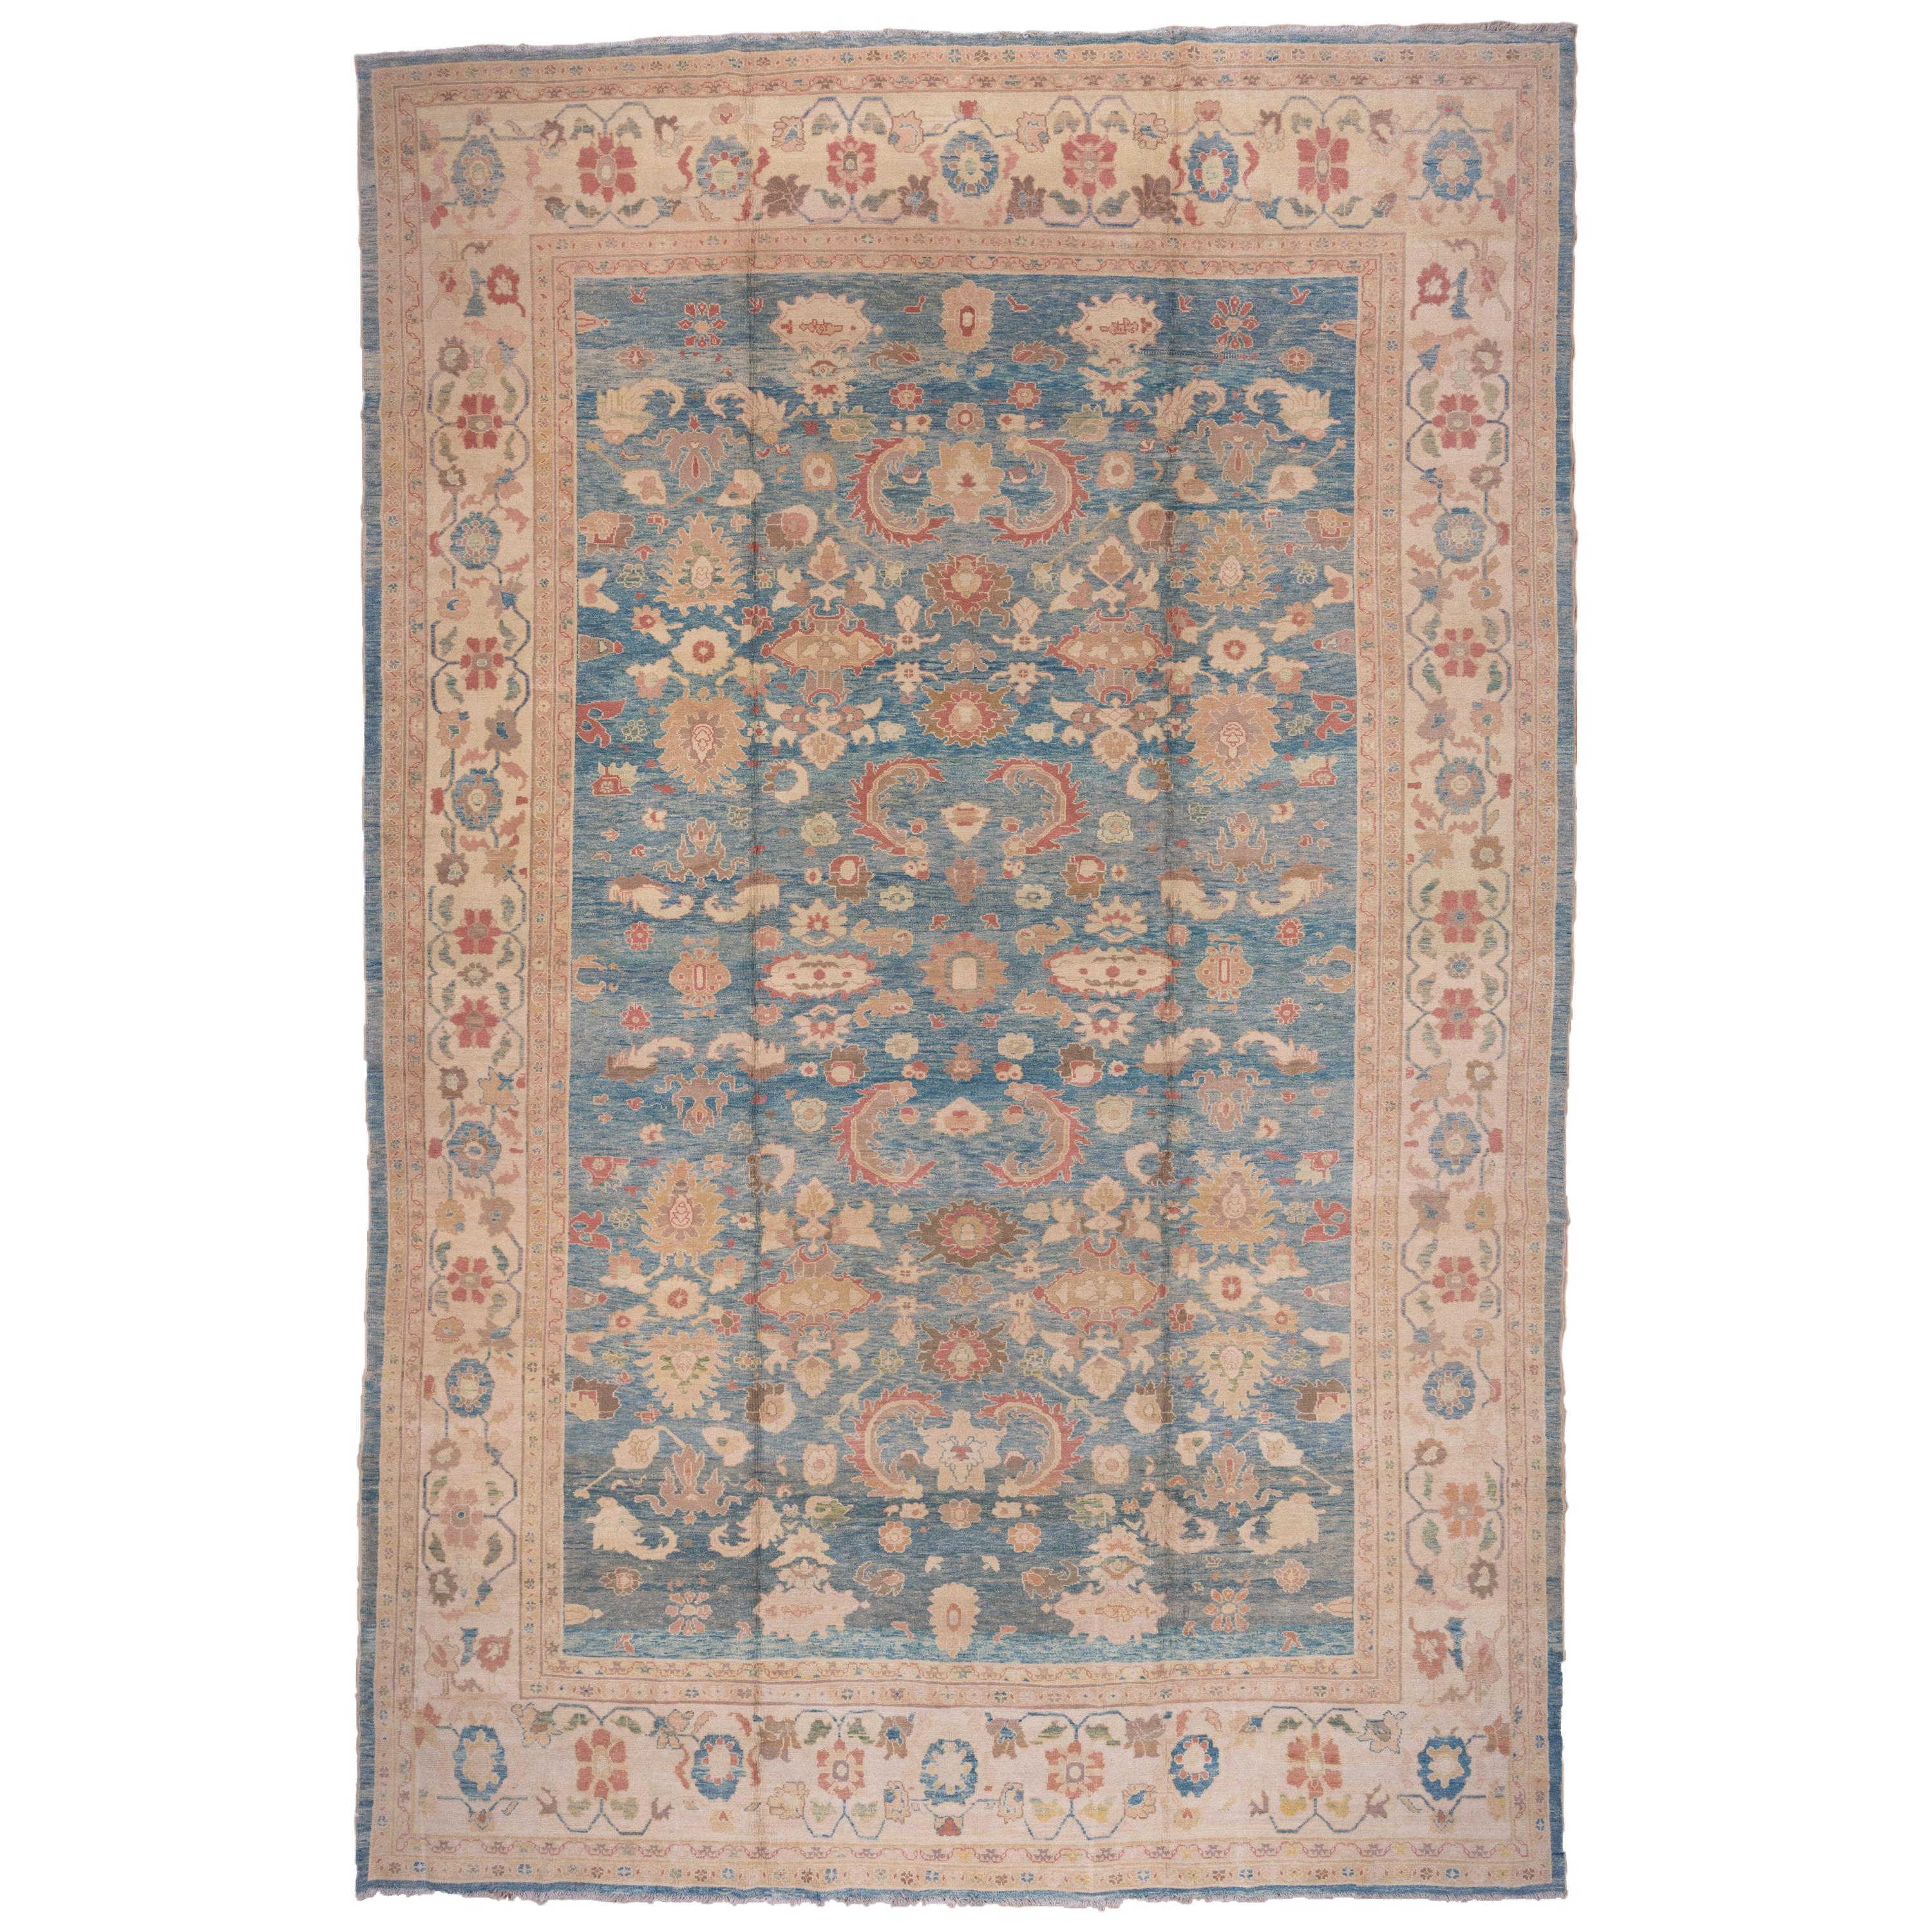 Sultanabad Carpet, Blue Field, Handmade Wool Carpet